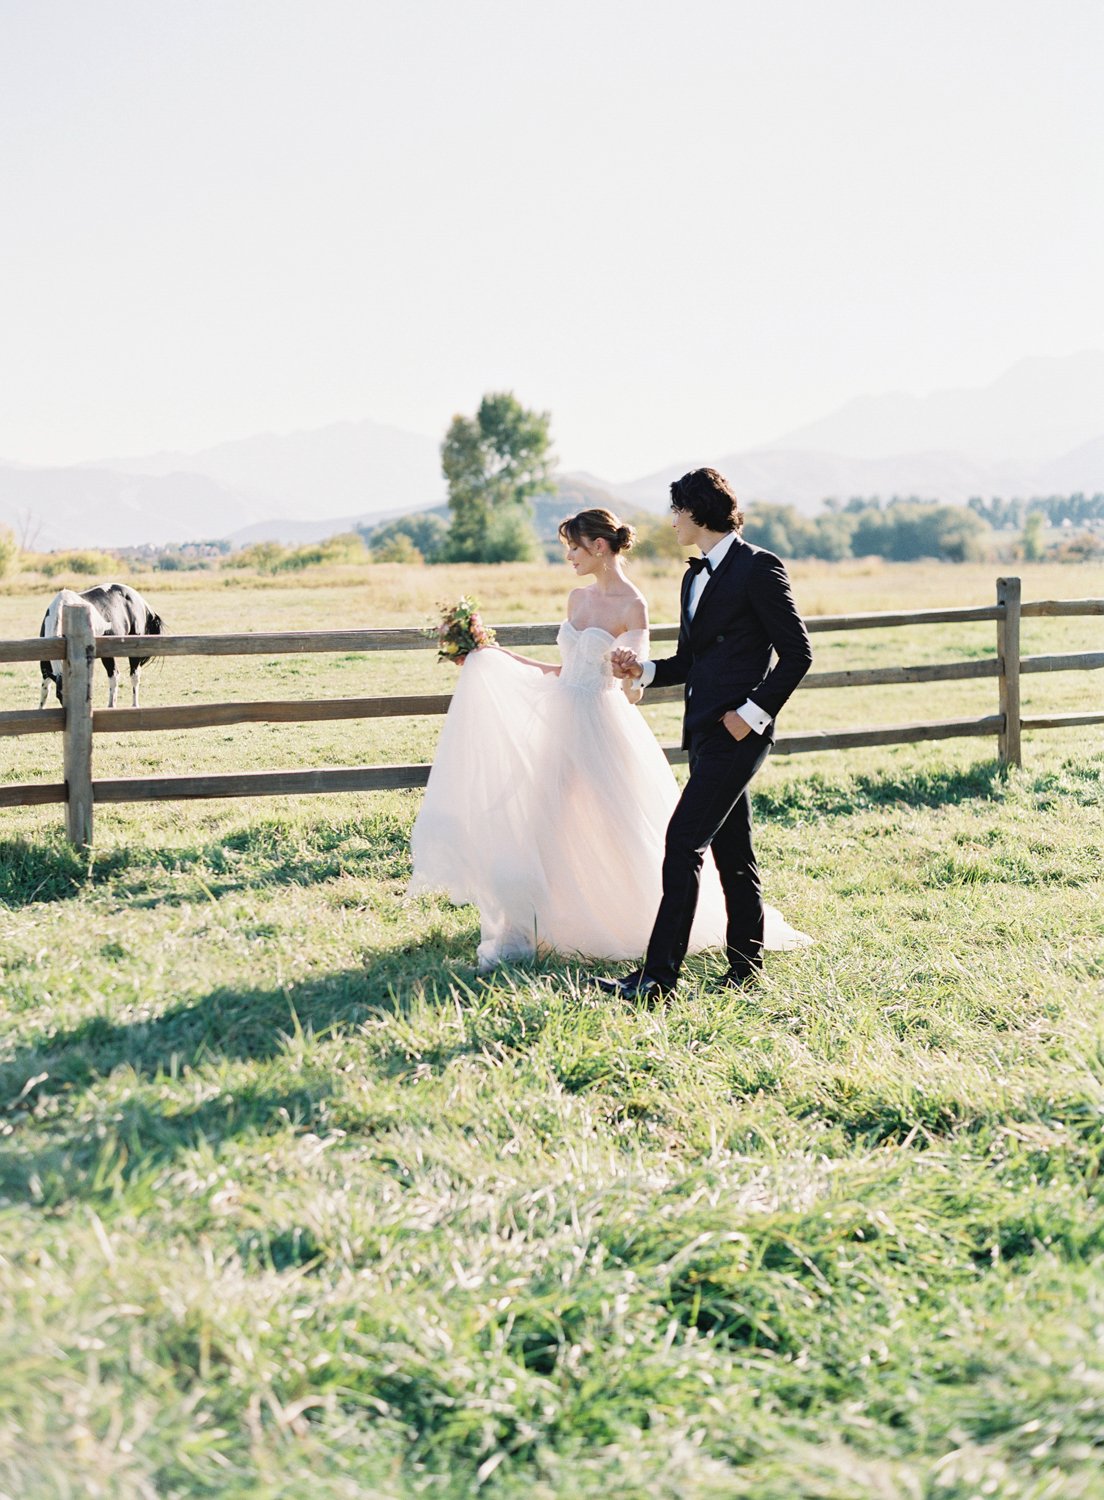 wisteria-photography.com | Wisteria Photography | Flower Filled Ranch Wedding | Utah | Featured on Wedding Sparrow | Destination Photographer-2.jpg